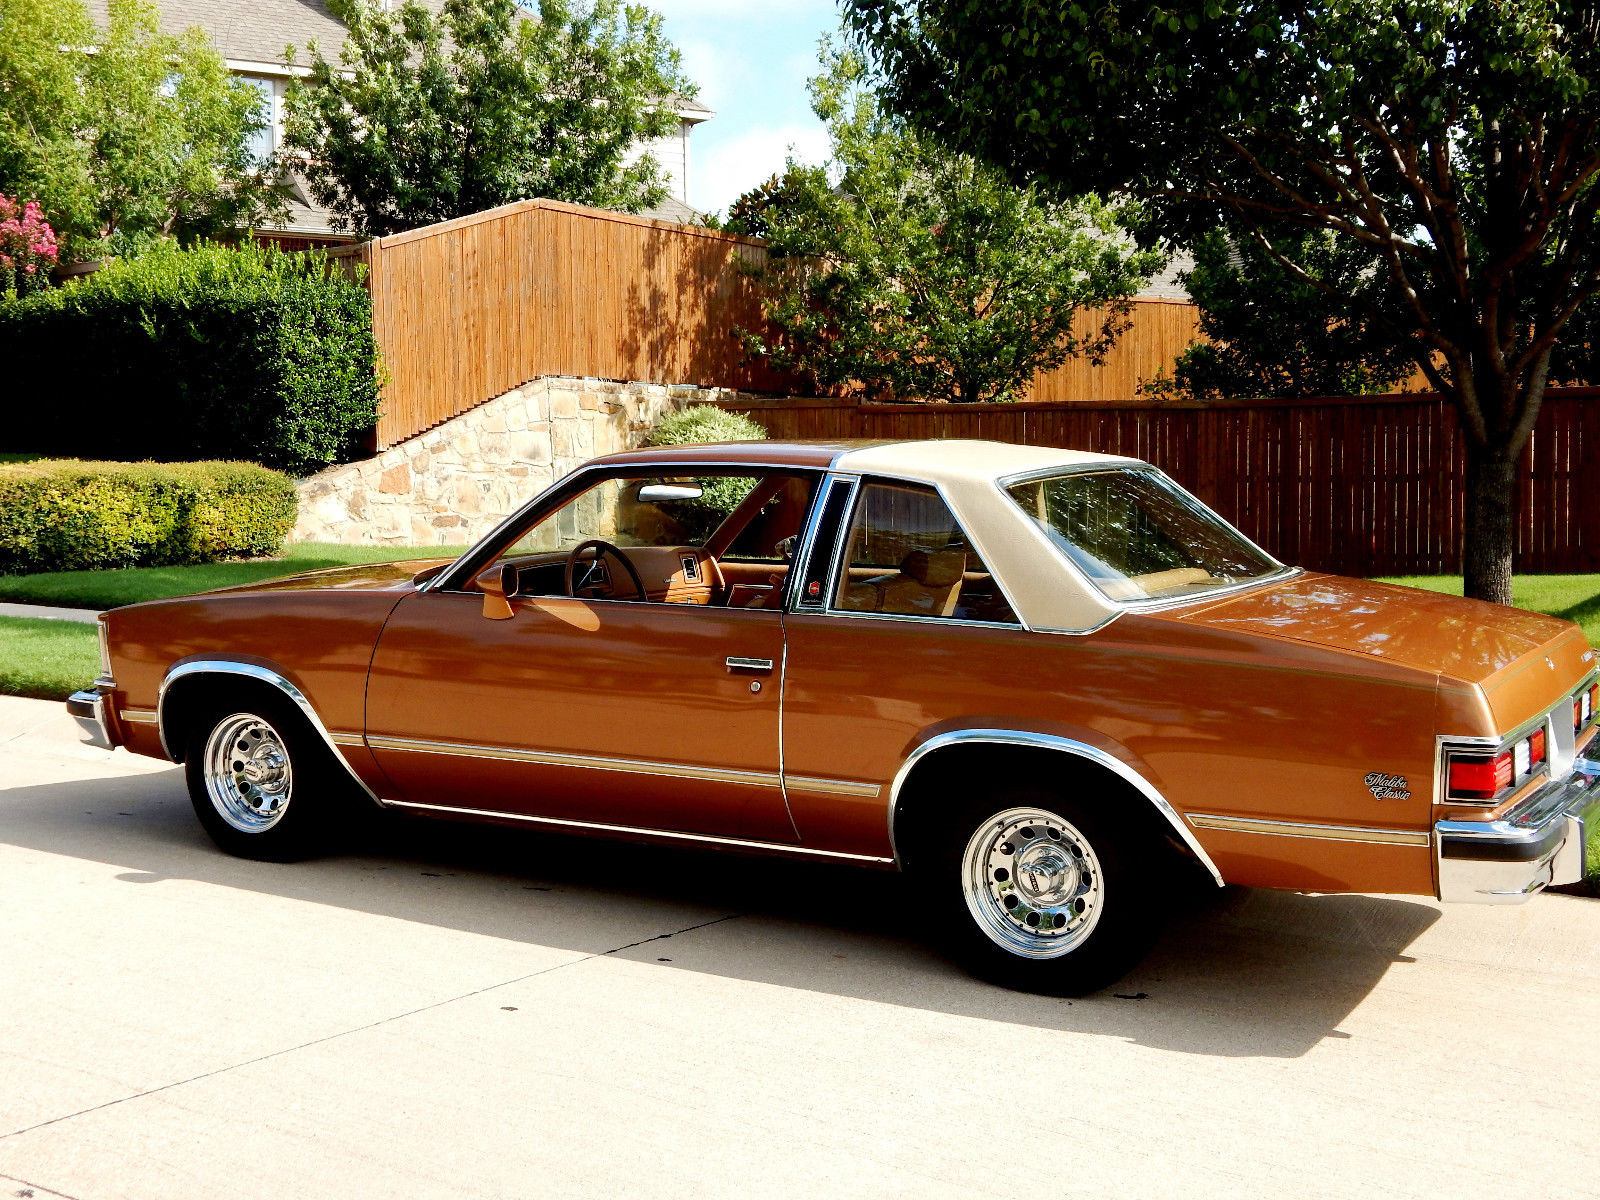 1979 Chevrolet Malibu for sale in McKinney, Texas, United States.